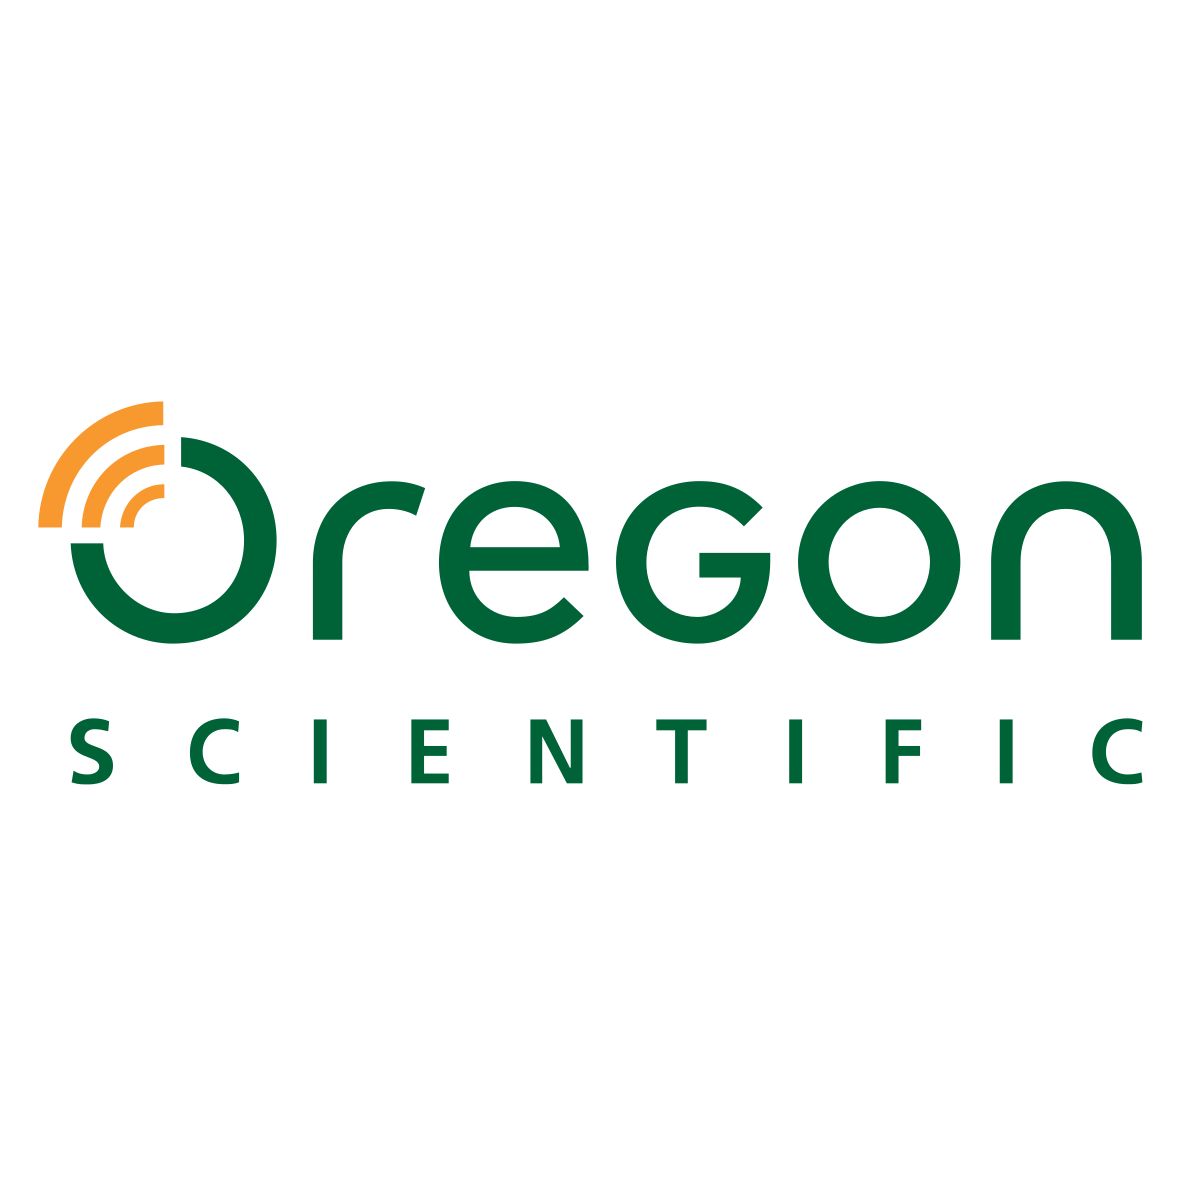 https://upload.wikimedia.org/wikipedia/commons/thumb/6/66/Oregon_Scientific_logo.svg/1200px-Oregon_Scientific_logo.svg.png